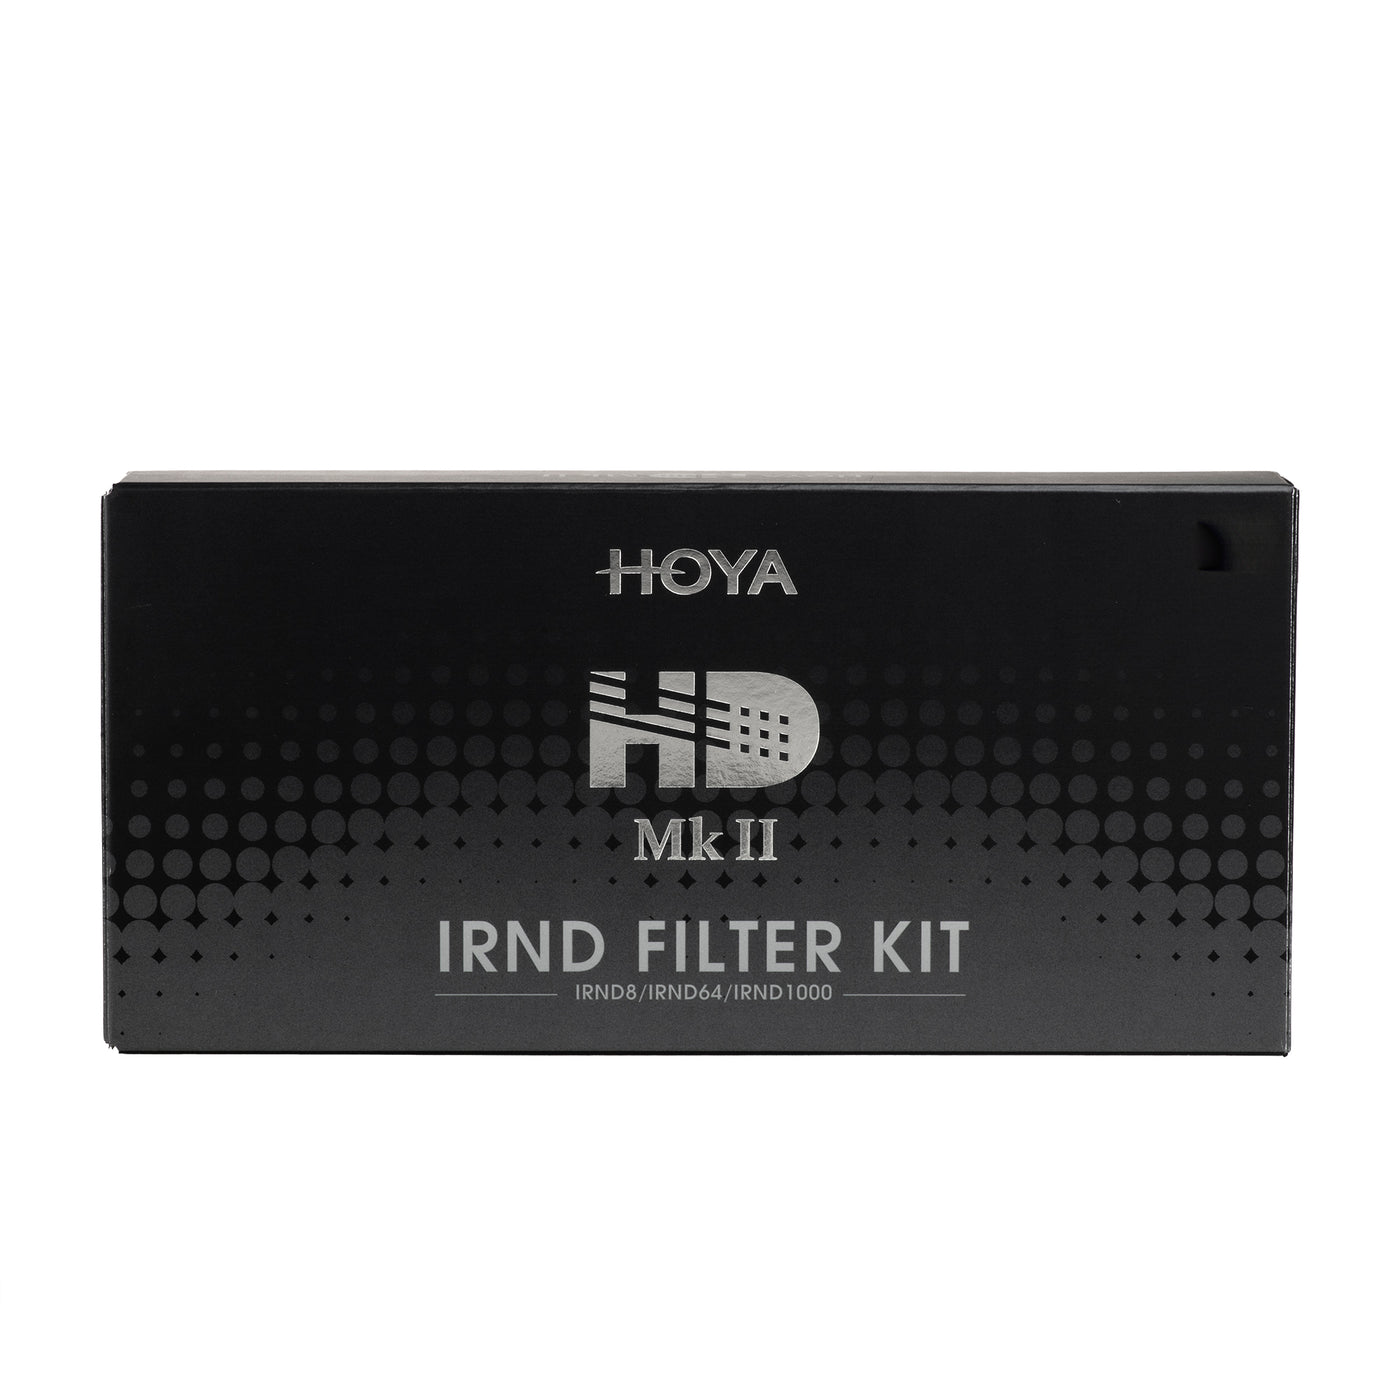 HD MKII IRND KIT - (3) Filter ND Kit